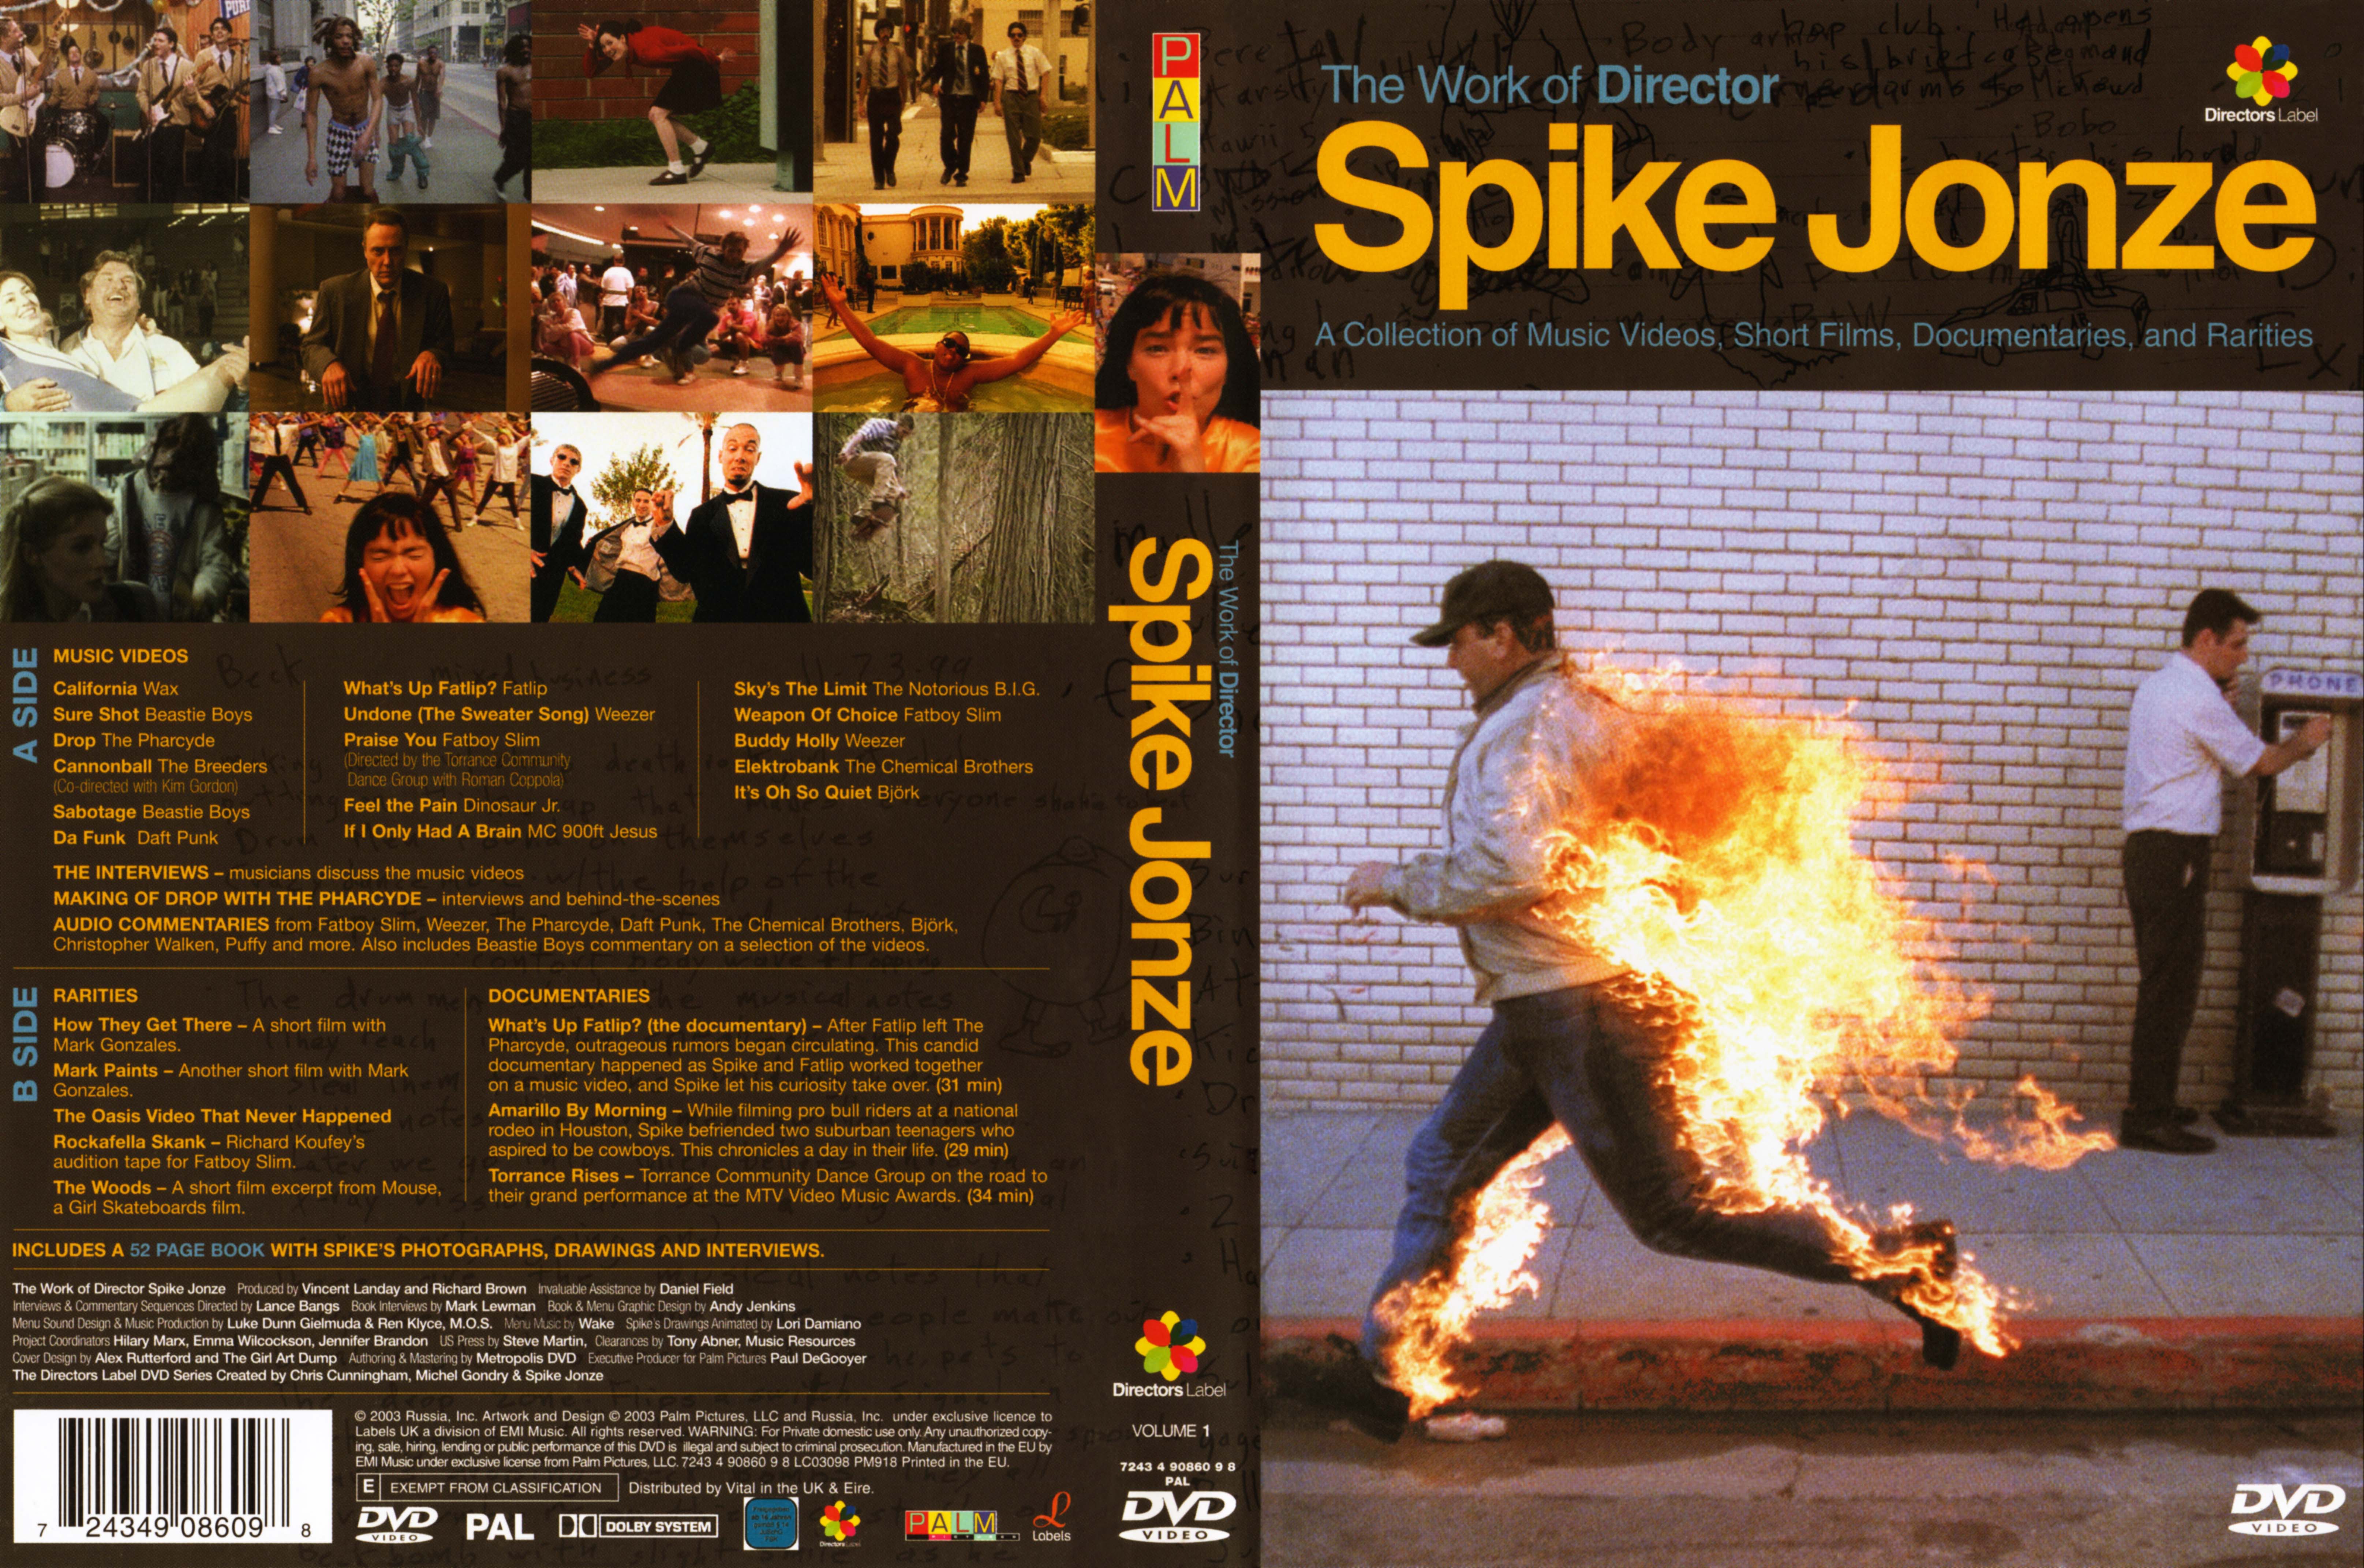 Jaquette DVD The Work of director Spike Jonze